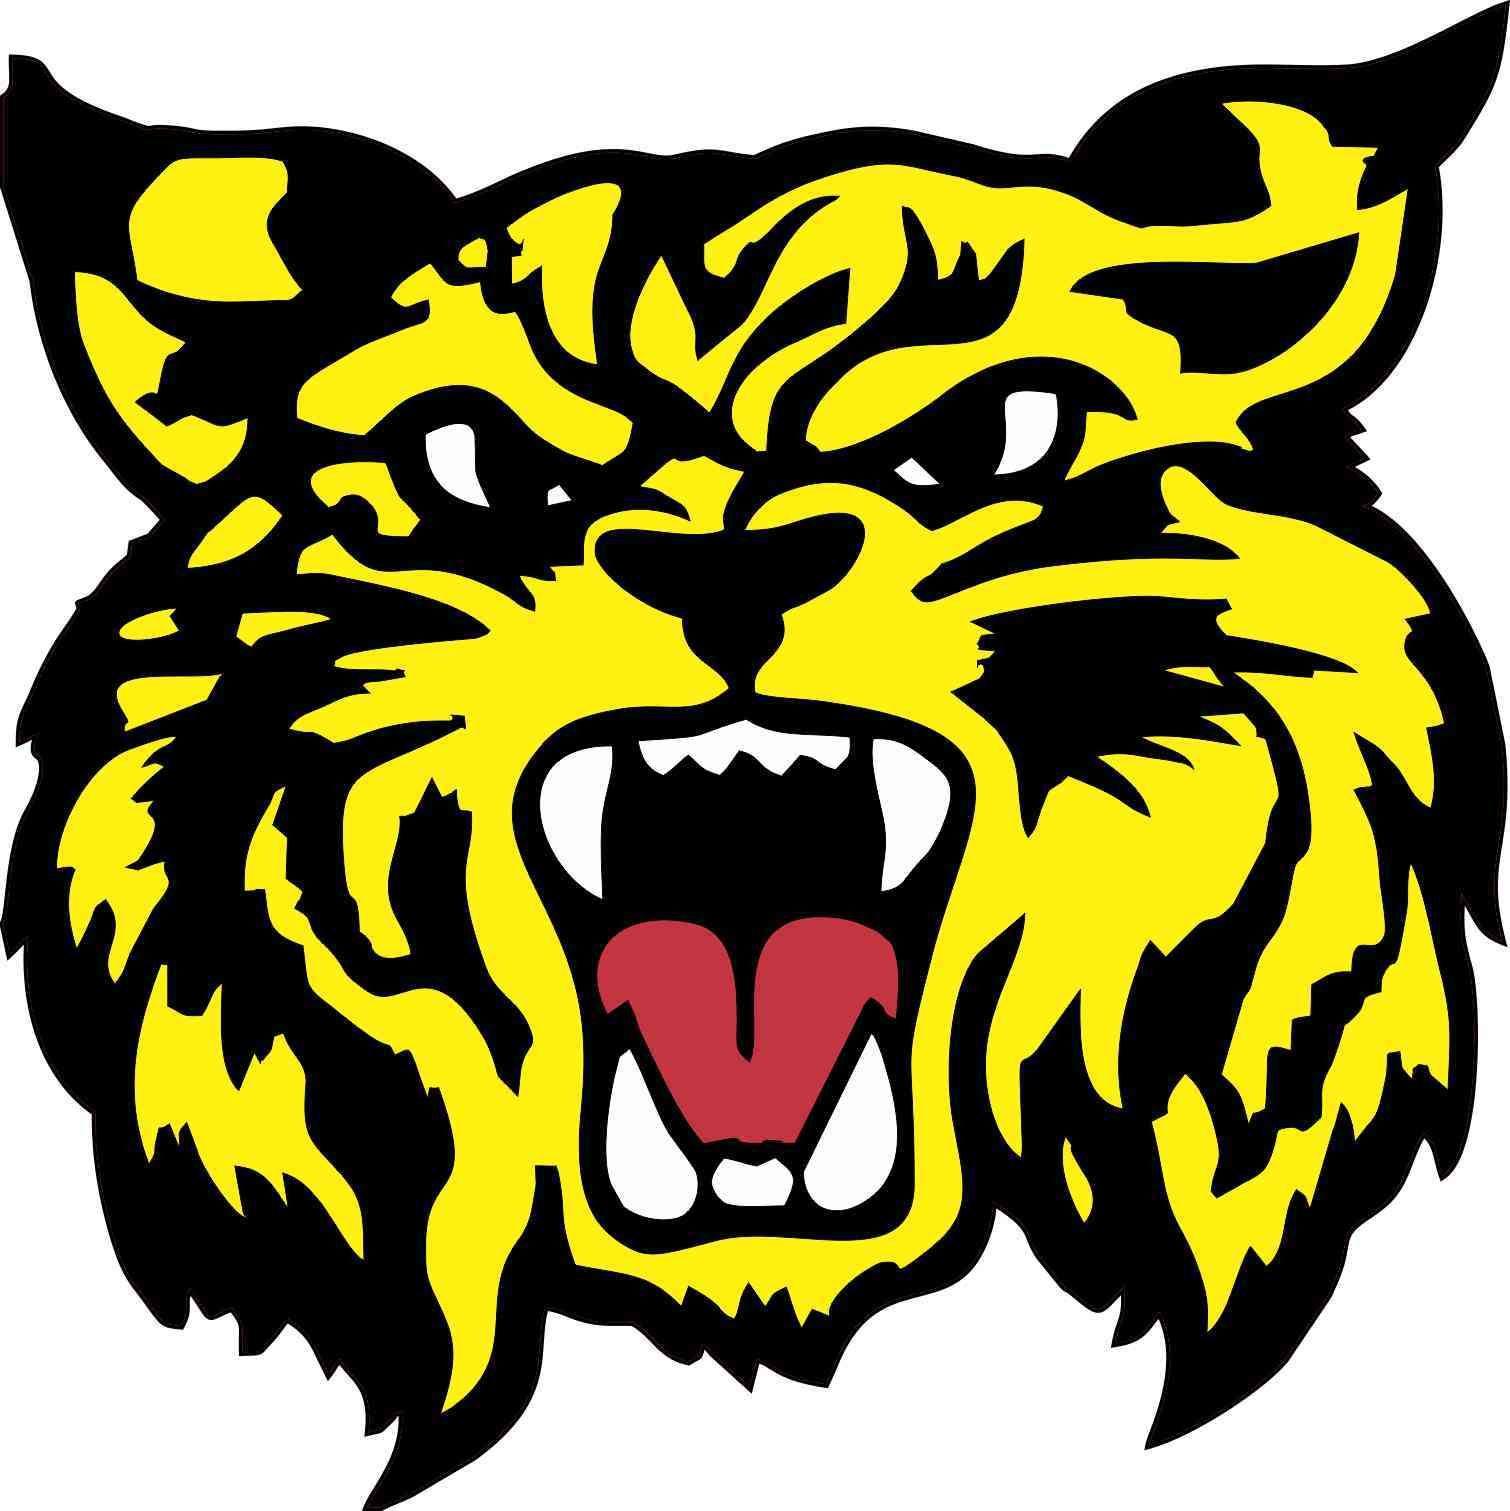 Black and Yellow Wildcats Logo - 10in x 10in Yellow Wildcat Sticker | Mascots | Pinterest | Stickers ...